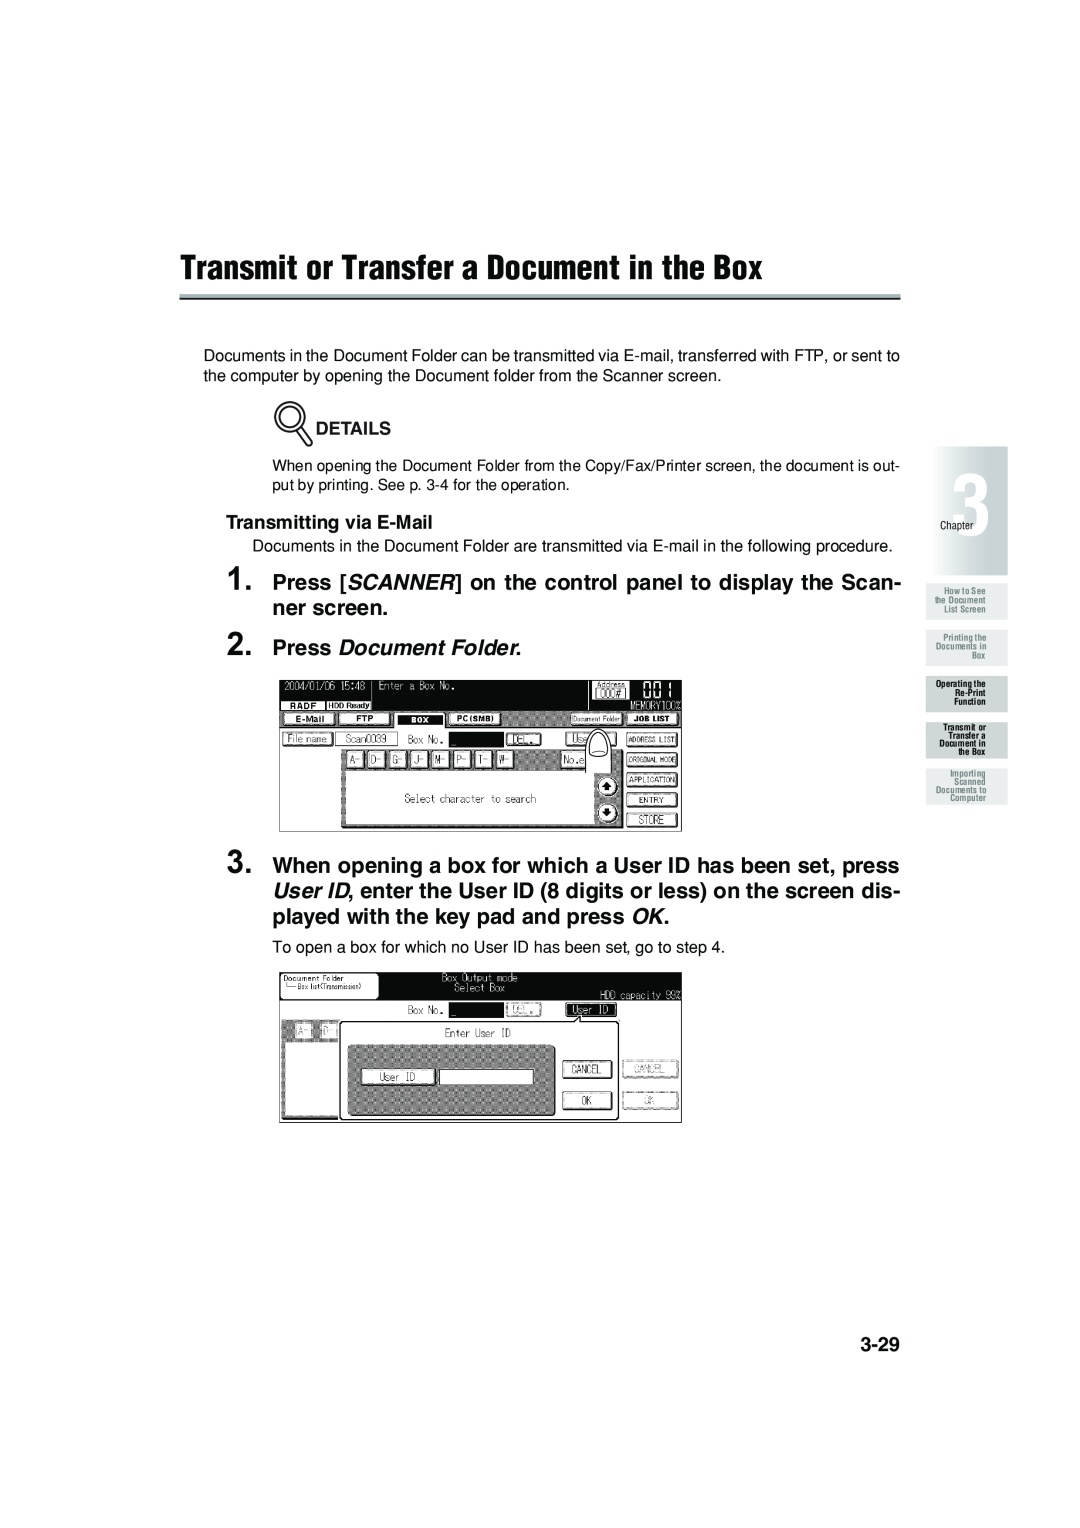 Konica Minolta 7222 Transmit or Transfer a Document in the Box, Press Document Folder, Transmitting via E-Mail, Details 